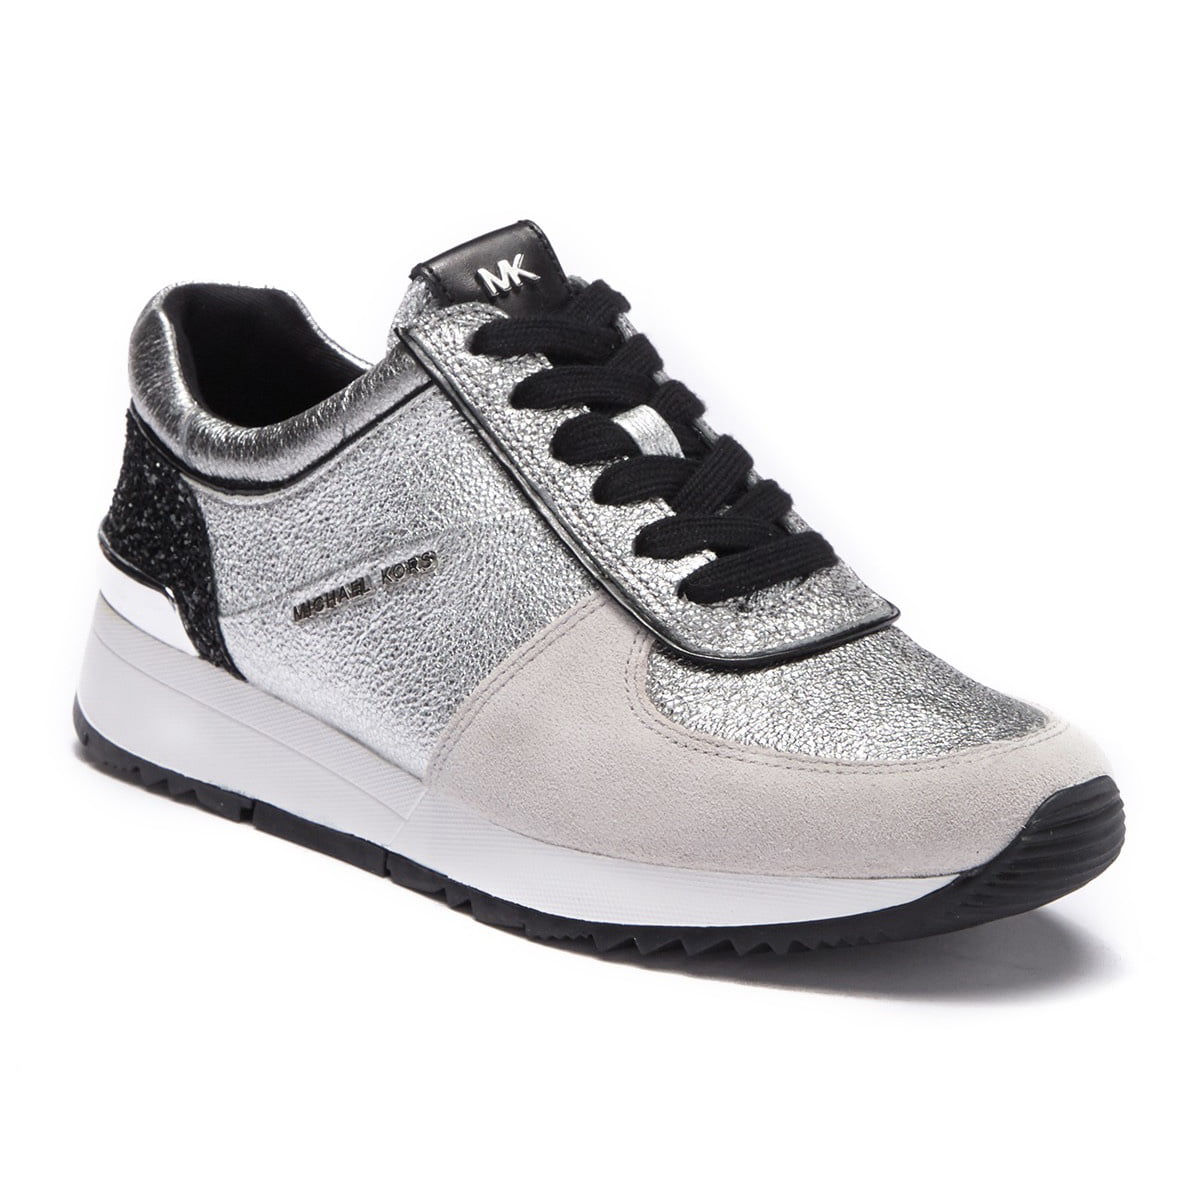 Michael Kors MK Women's Allie Trainer Sparkle Metallic Sneakers Shoes  Silver (7.5)